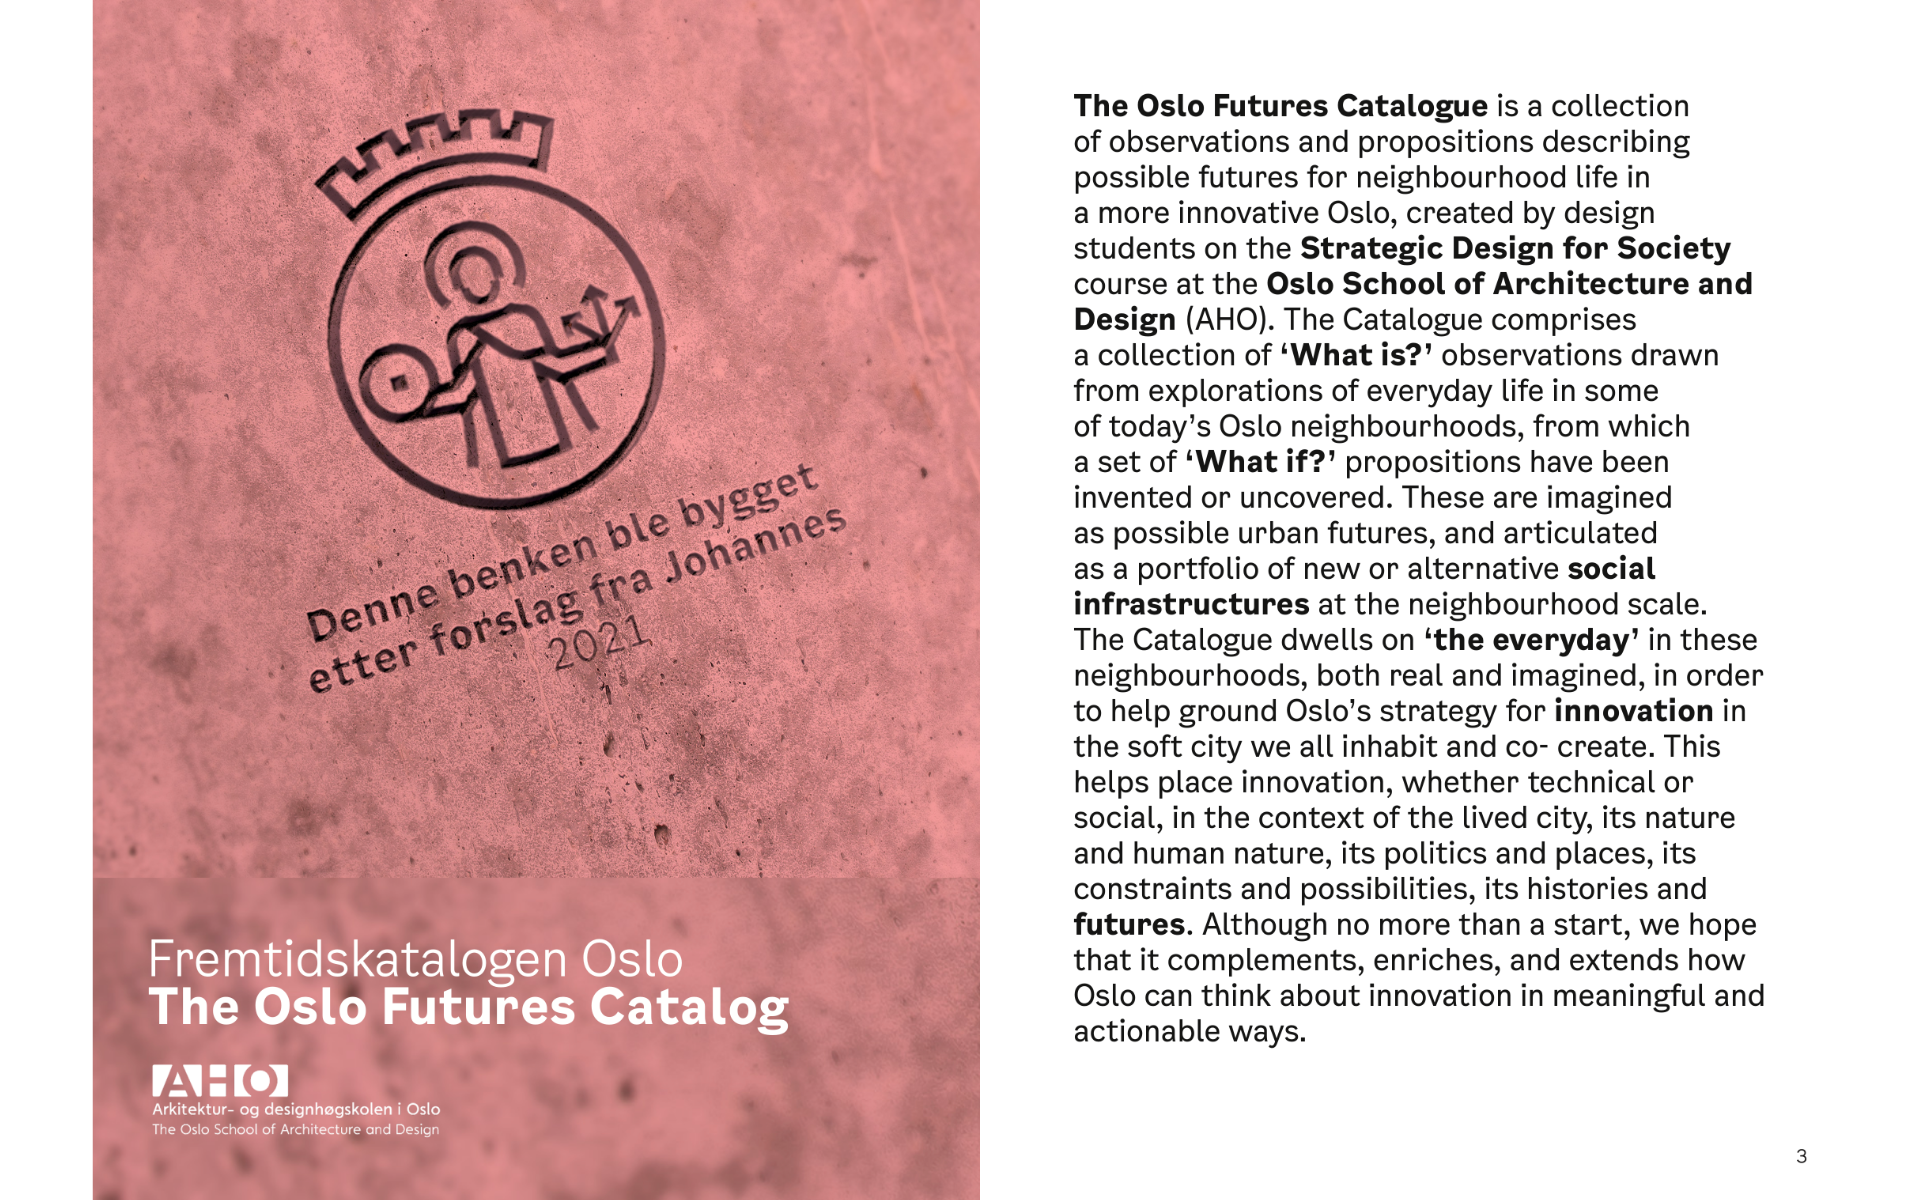 Strategic design for Society: the Oslo Futures Catalogue as a garden of  ideas | by Dan Hill | Digital Urban Living | Medium